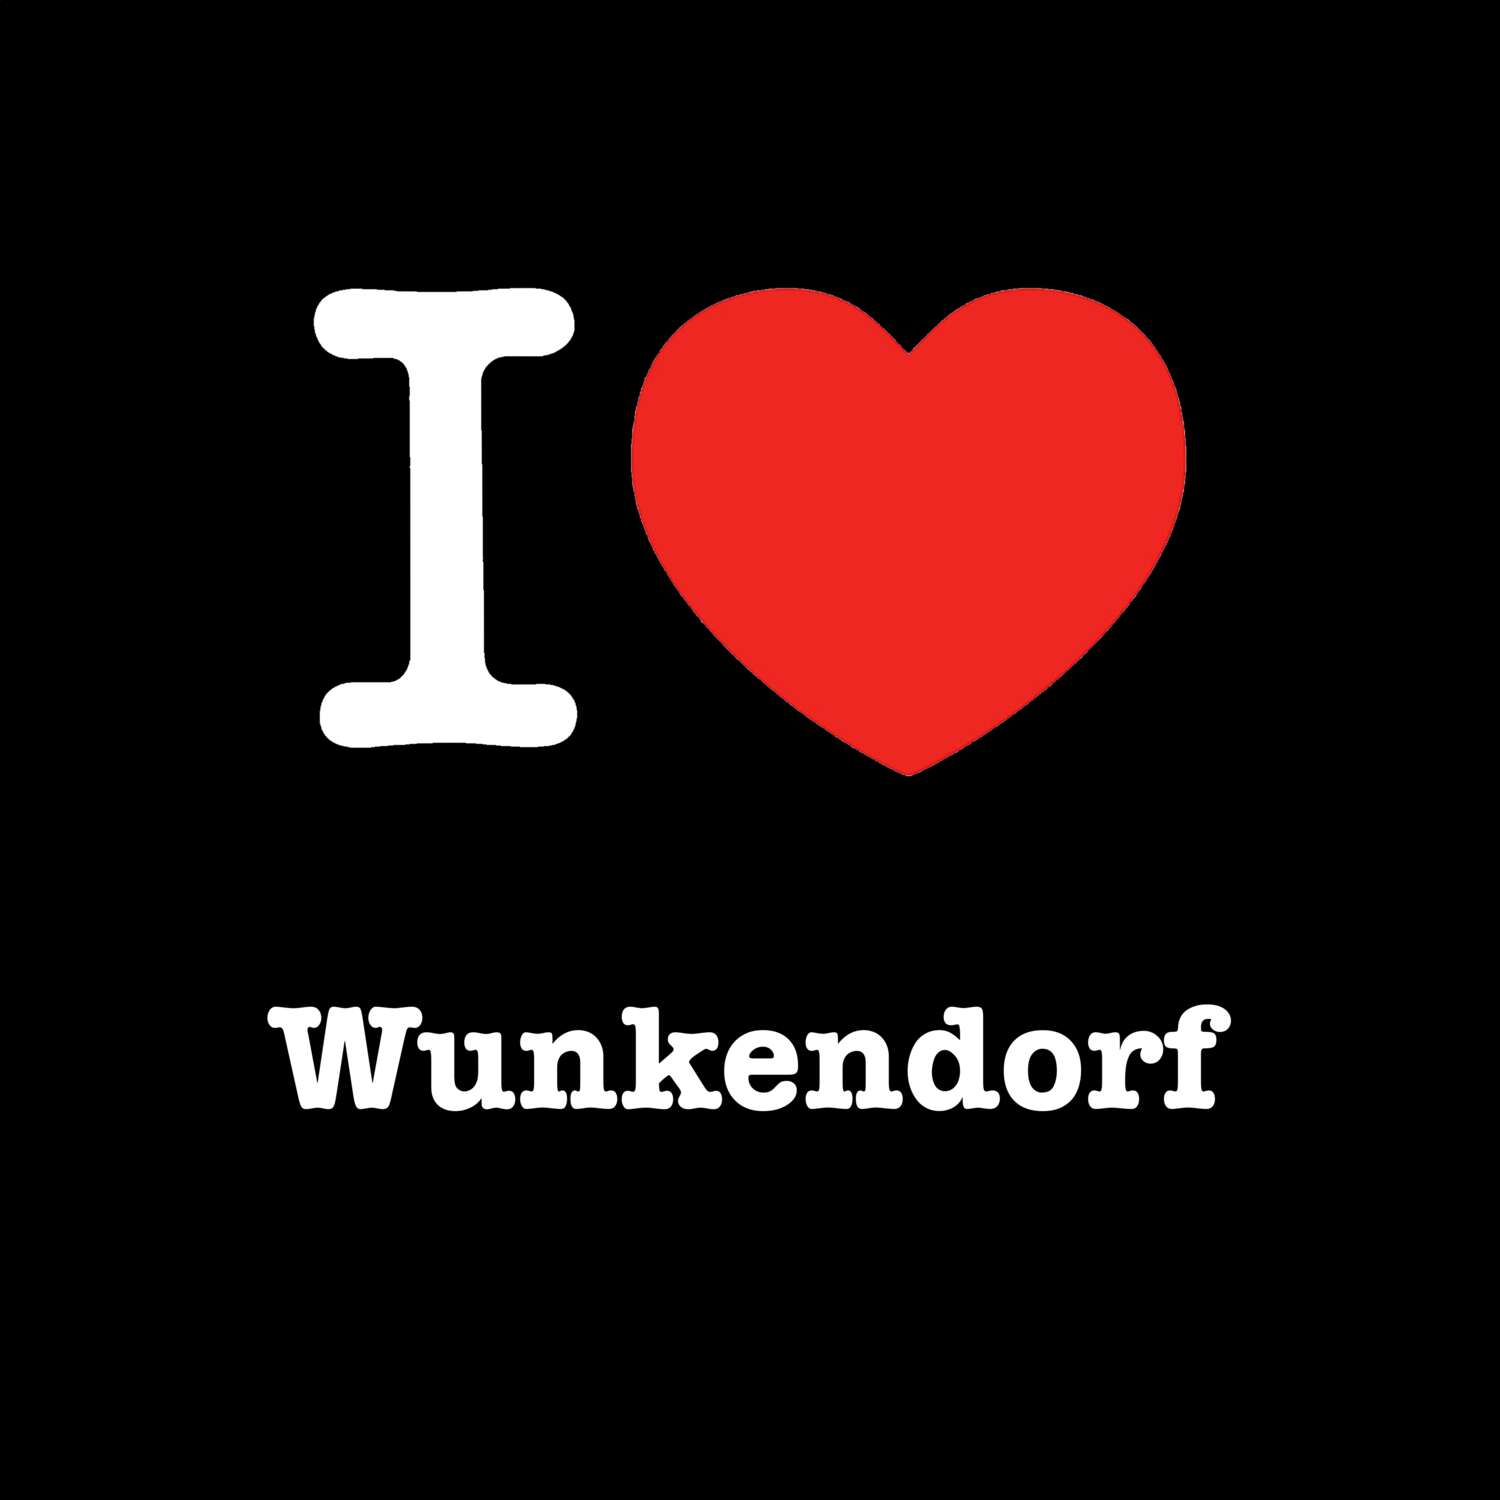 Wunkendorf T-Shirt »I love«